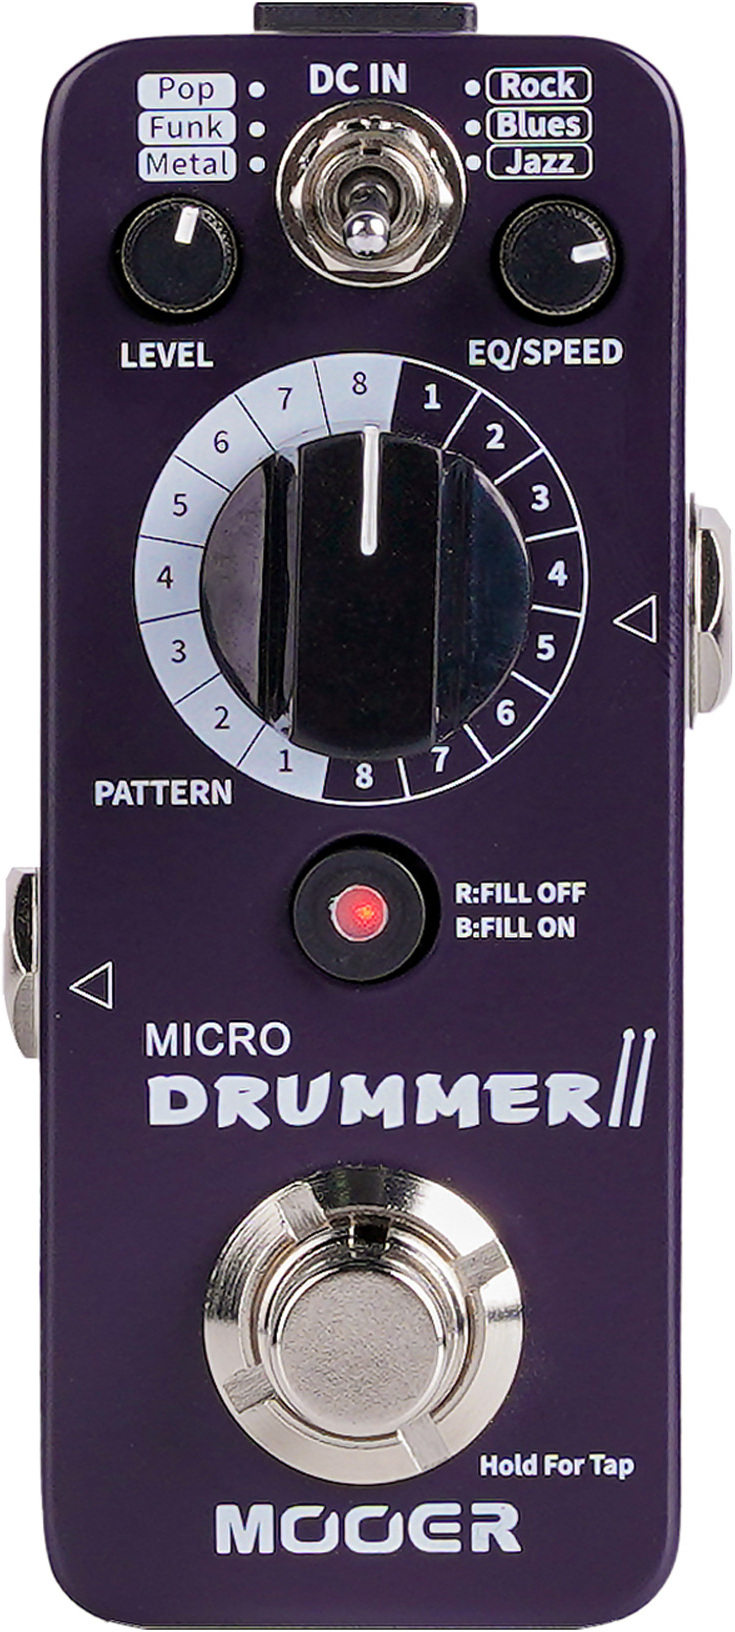 Mooer Micro Drummer Ii - Drum machine - Main picture